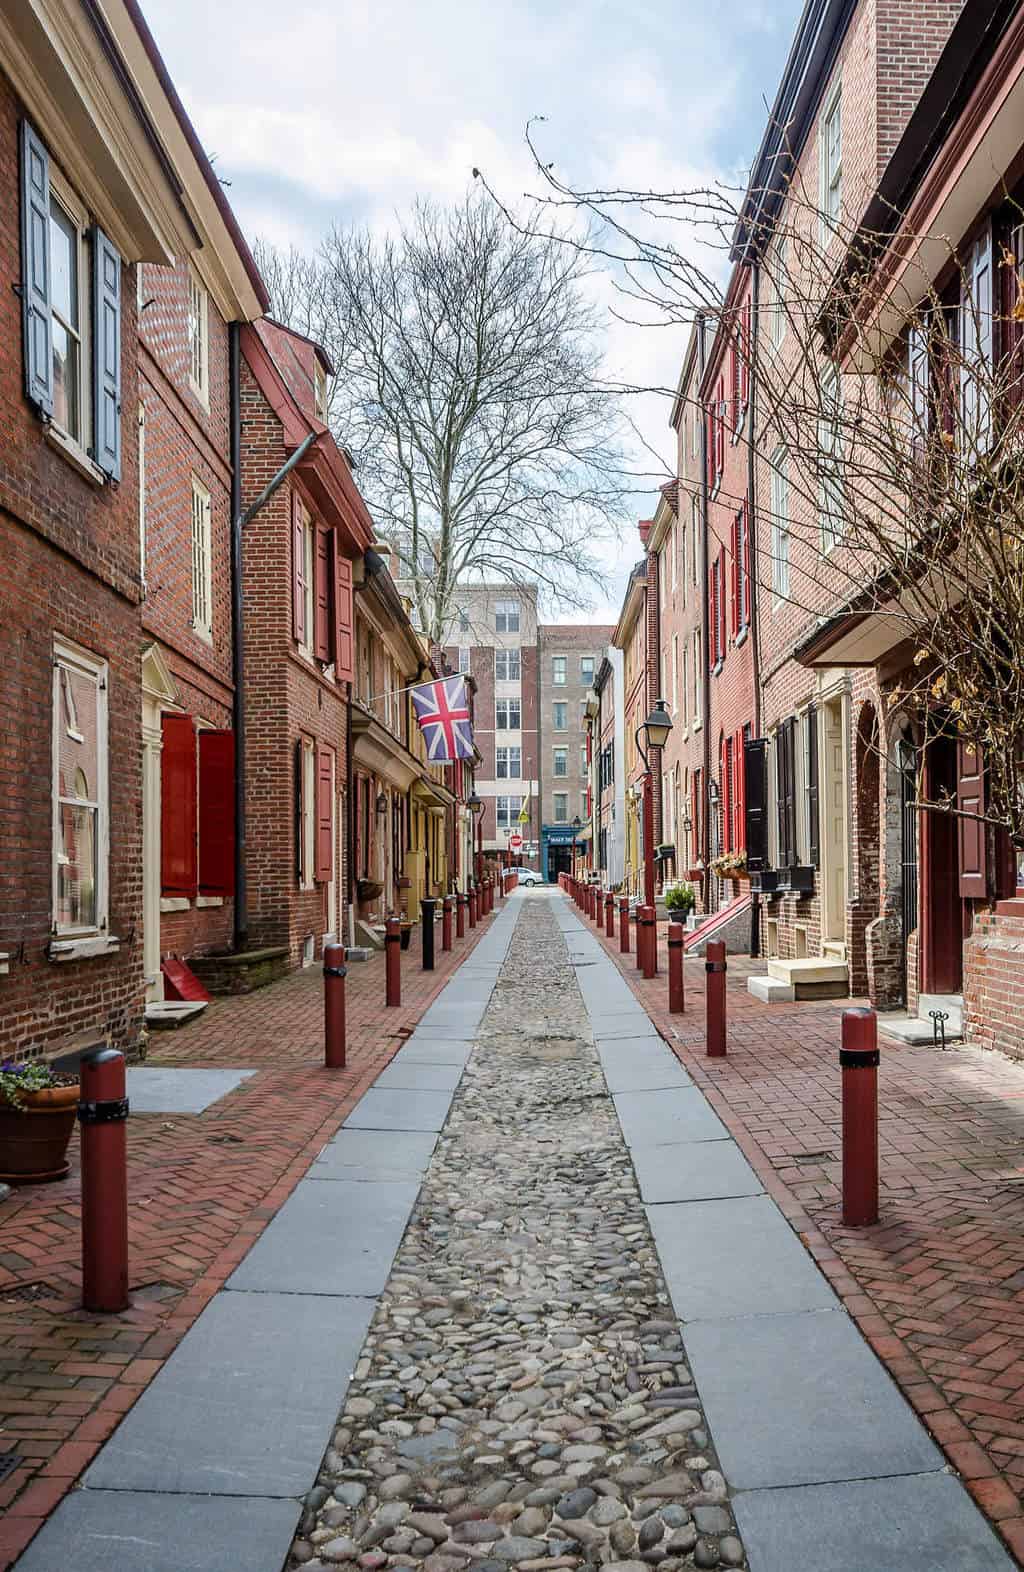 rowhouse street in Philadelphia, pennsylvania